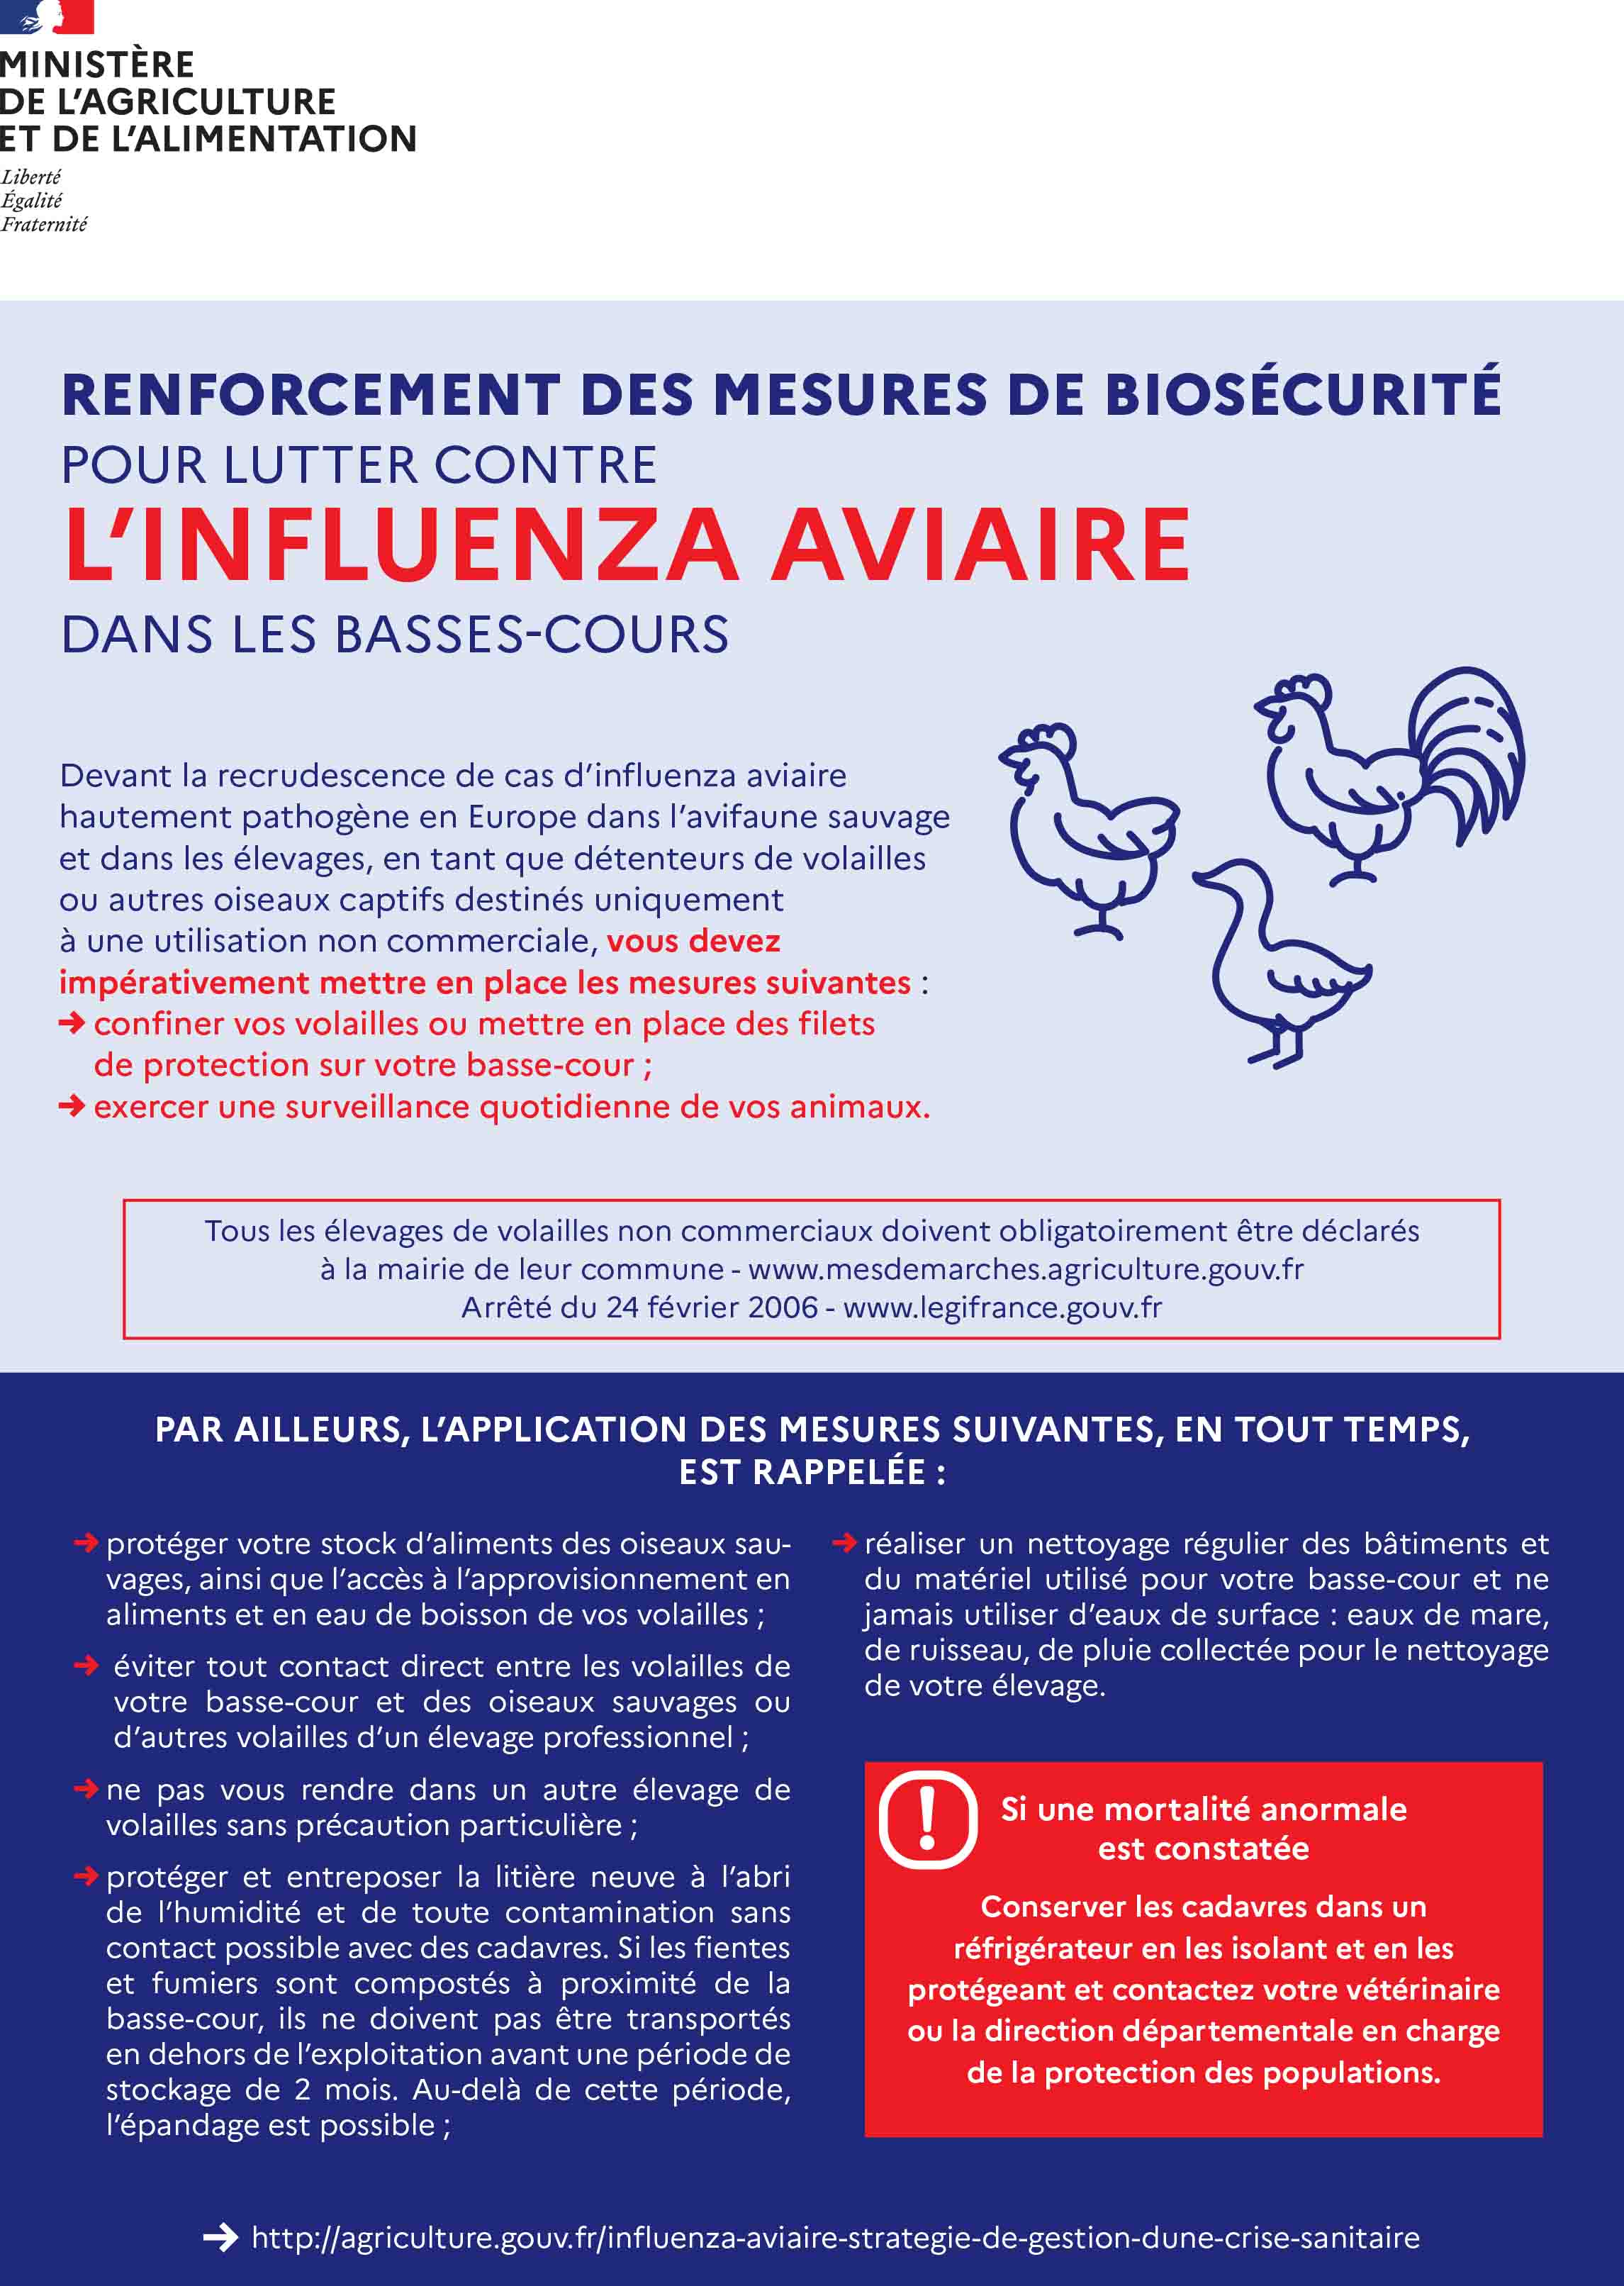 influenza aviaire_biosecurite_basses-cours.jpg